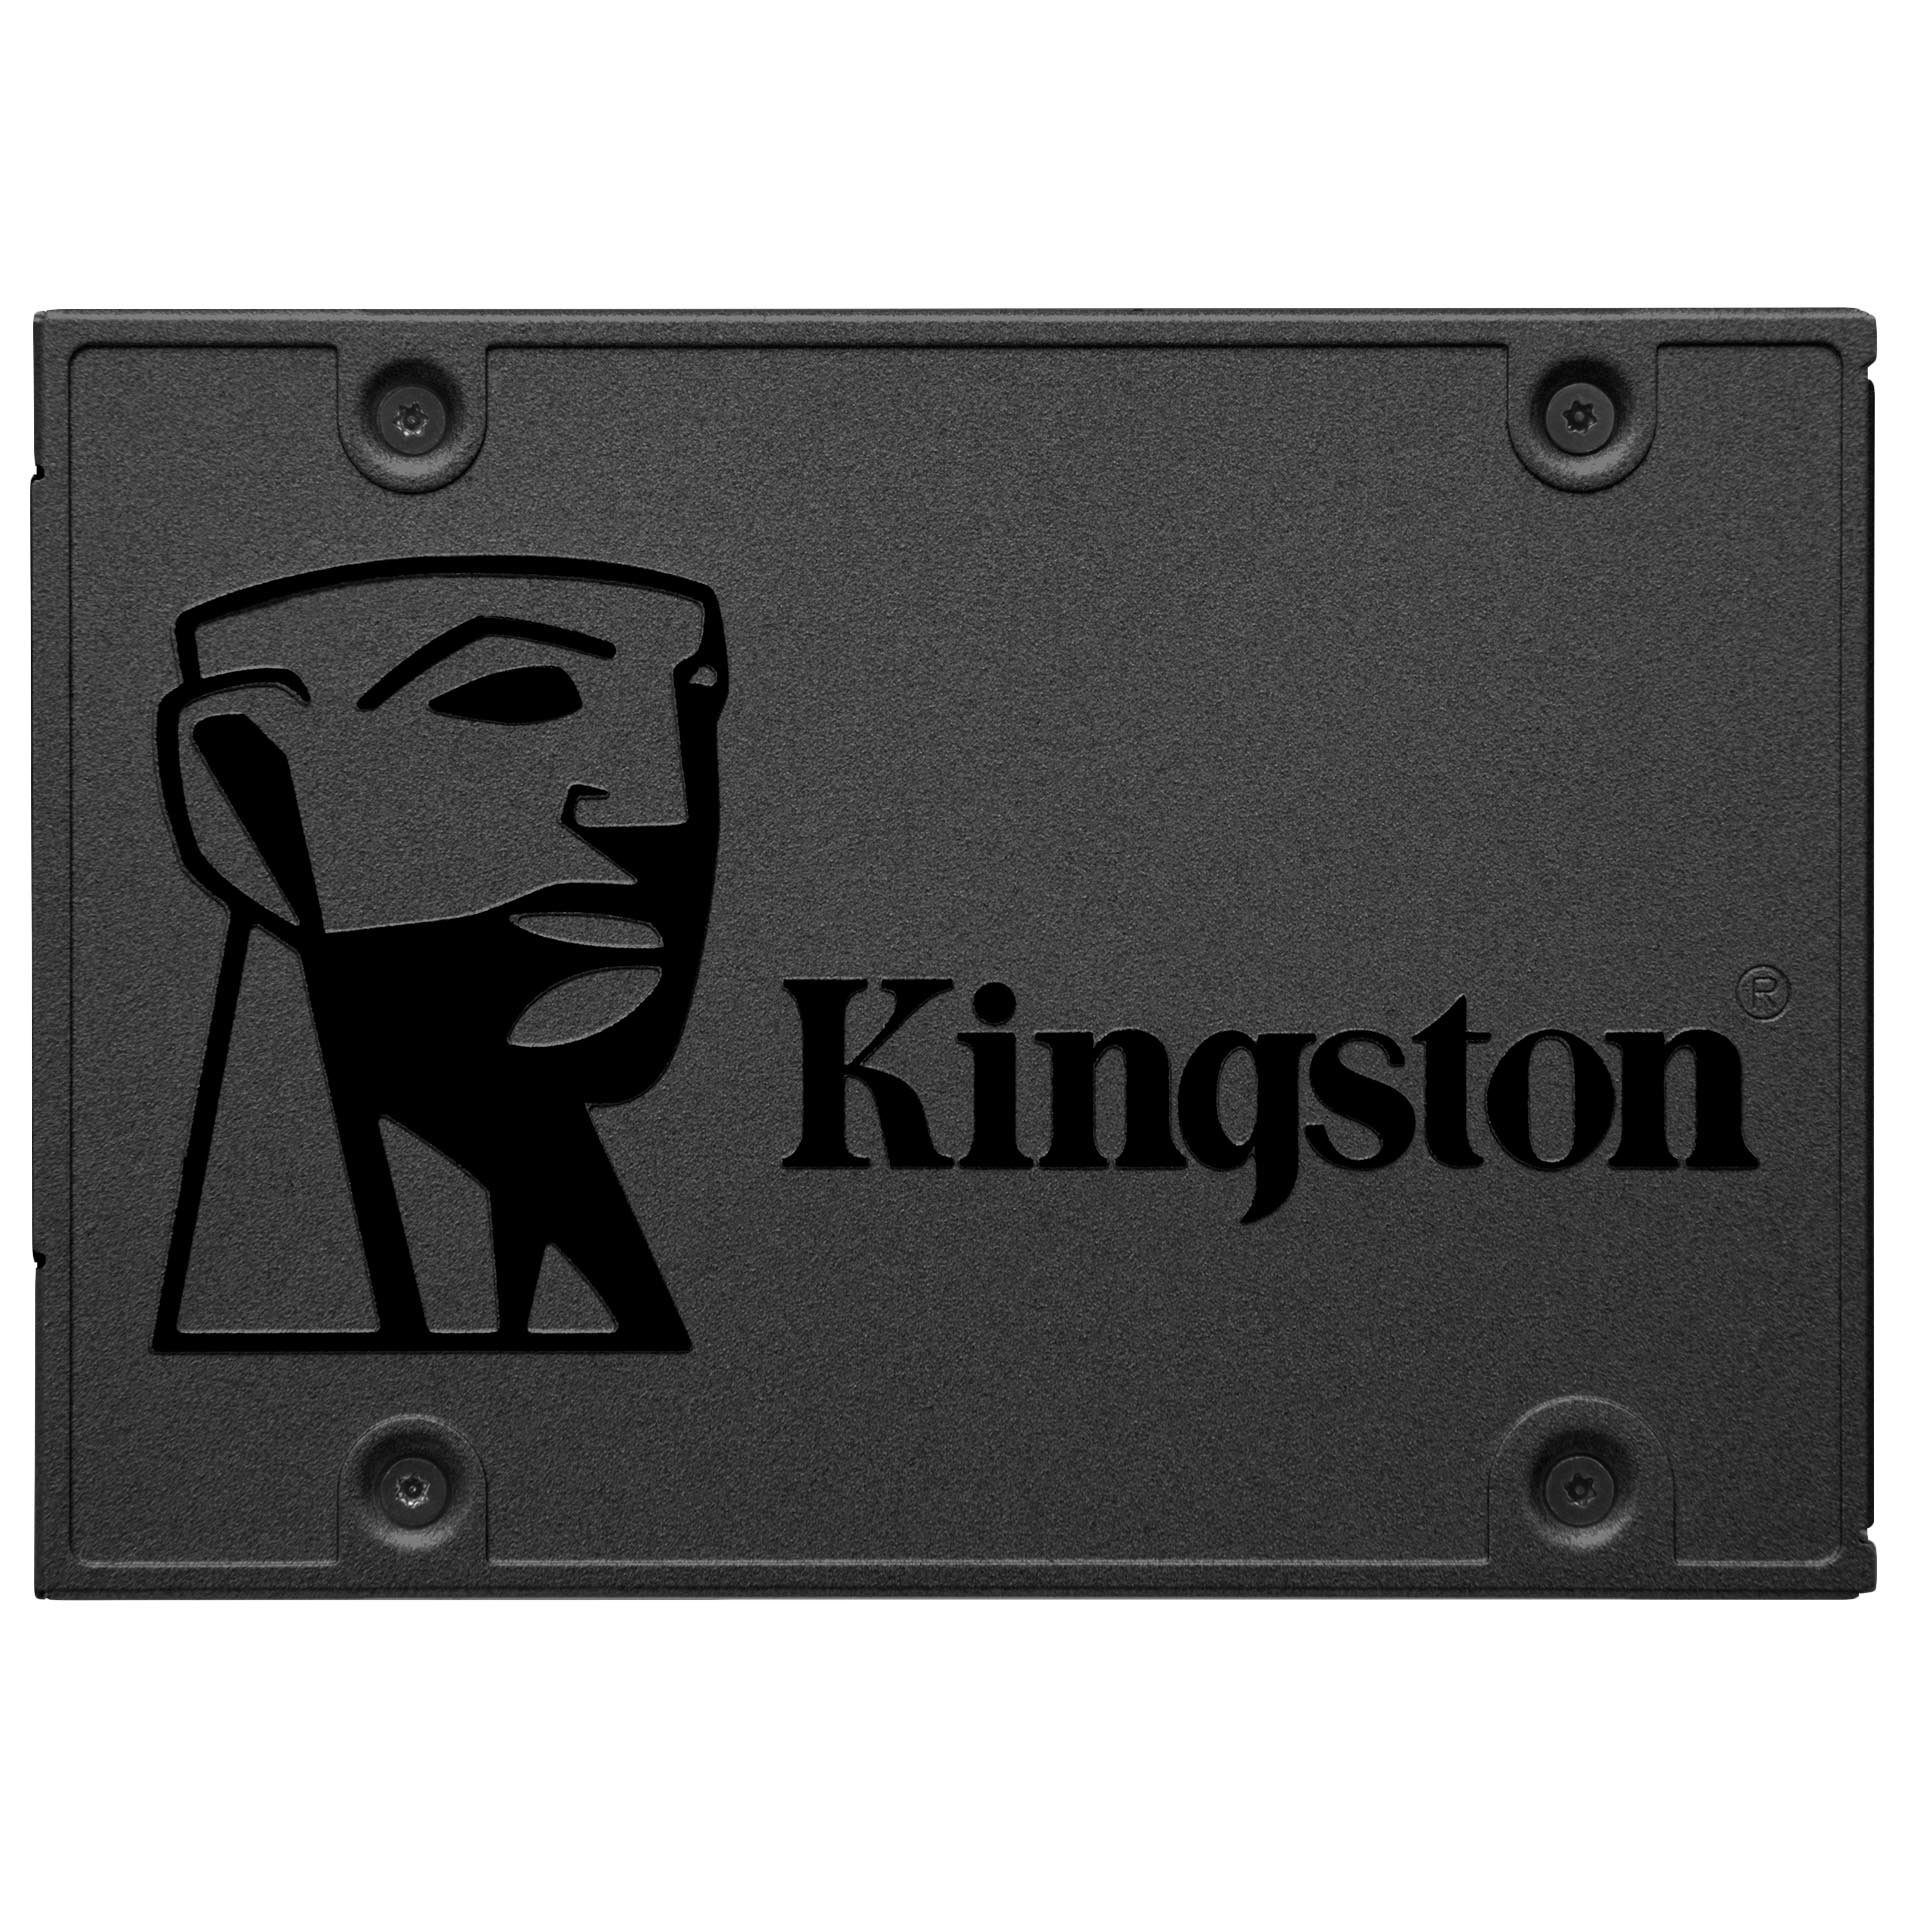 Внутренний твердотельный накопитель Kingston A400, SA400S37/480G, 480Гб, 2,5 твердотельный накопитель kingston a400 960gb sa400s37 960g